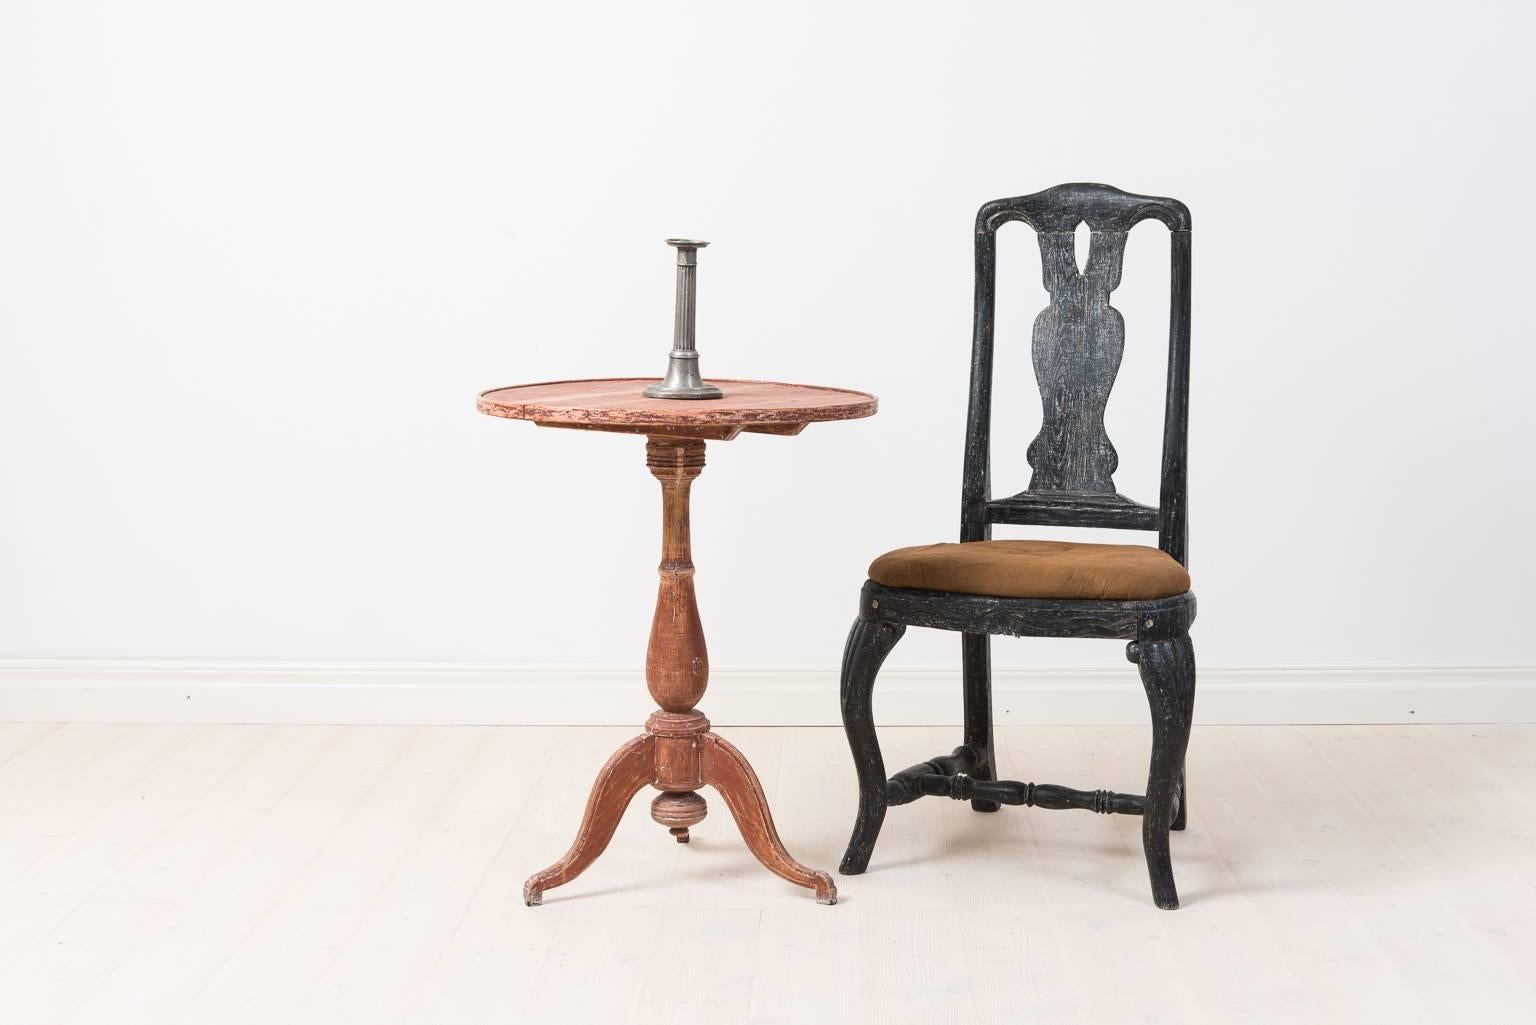 Pedestal table from Hälsingland, Sweden, circa 1820 